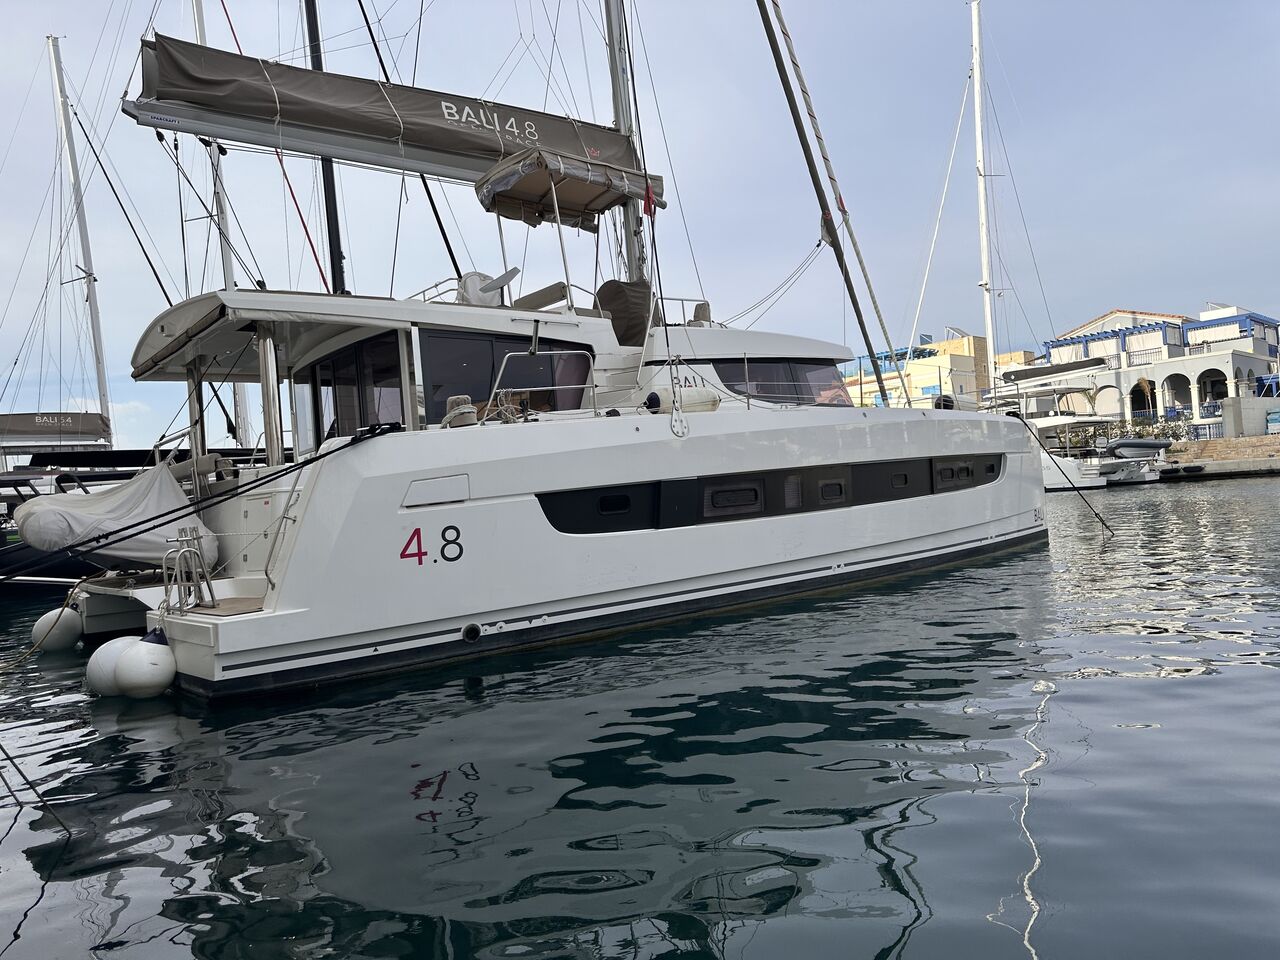 Bali 4.8 (sailboat) for sale